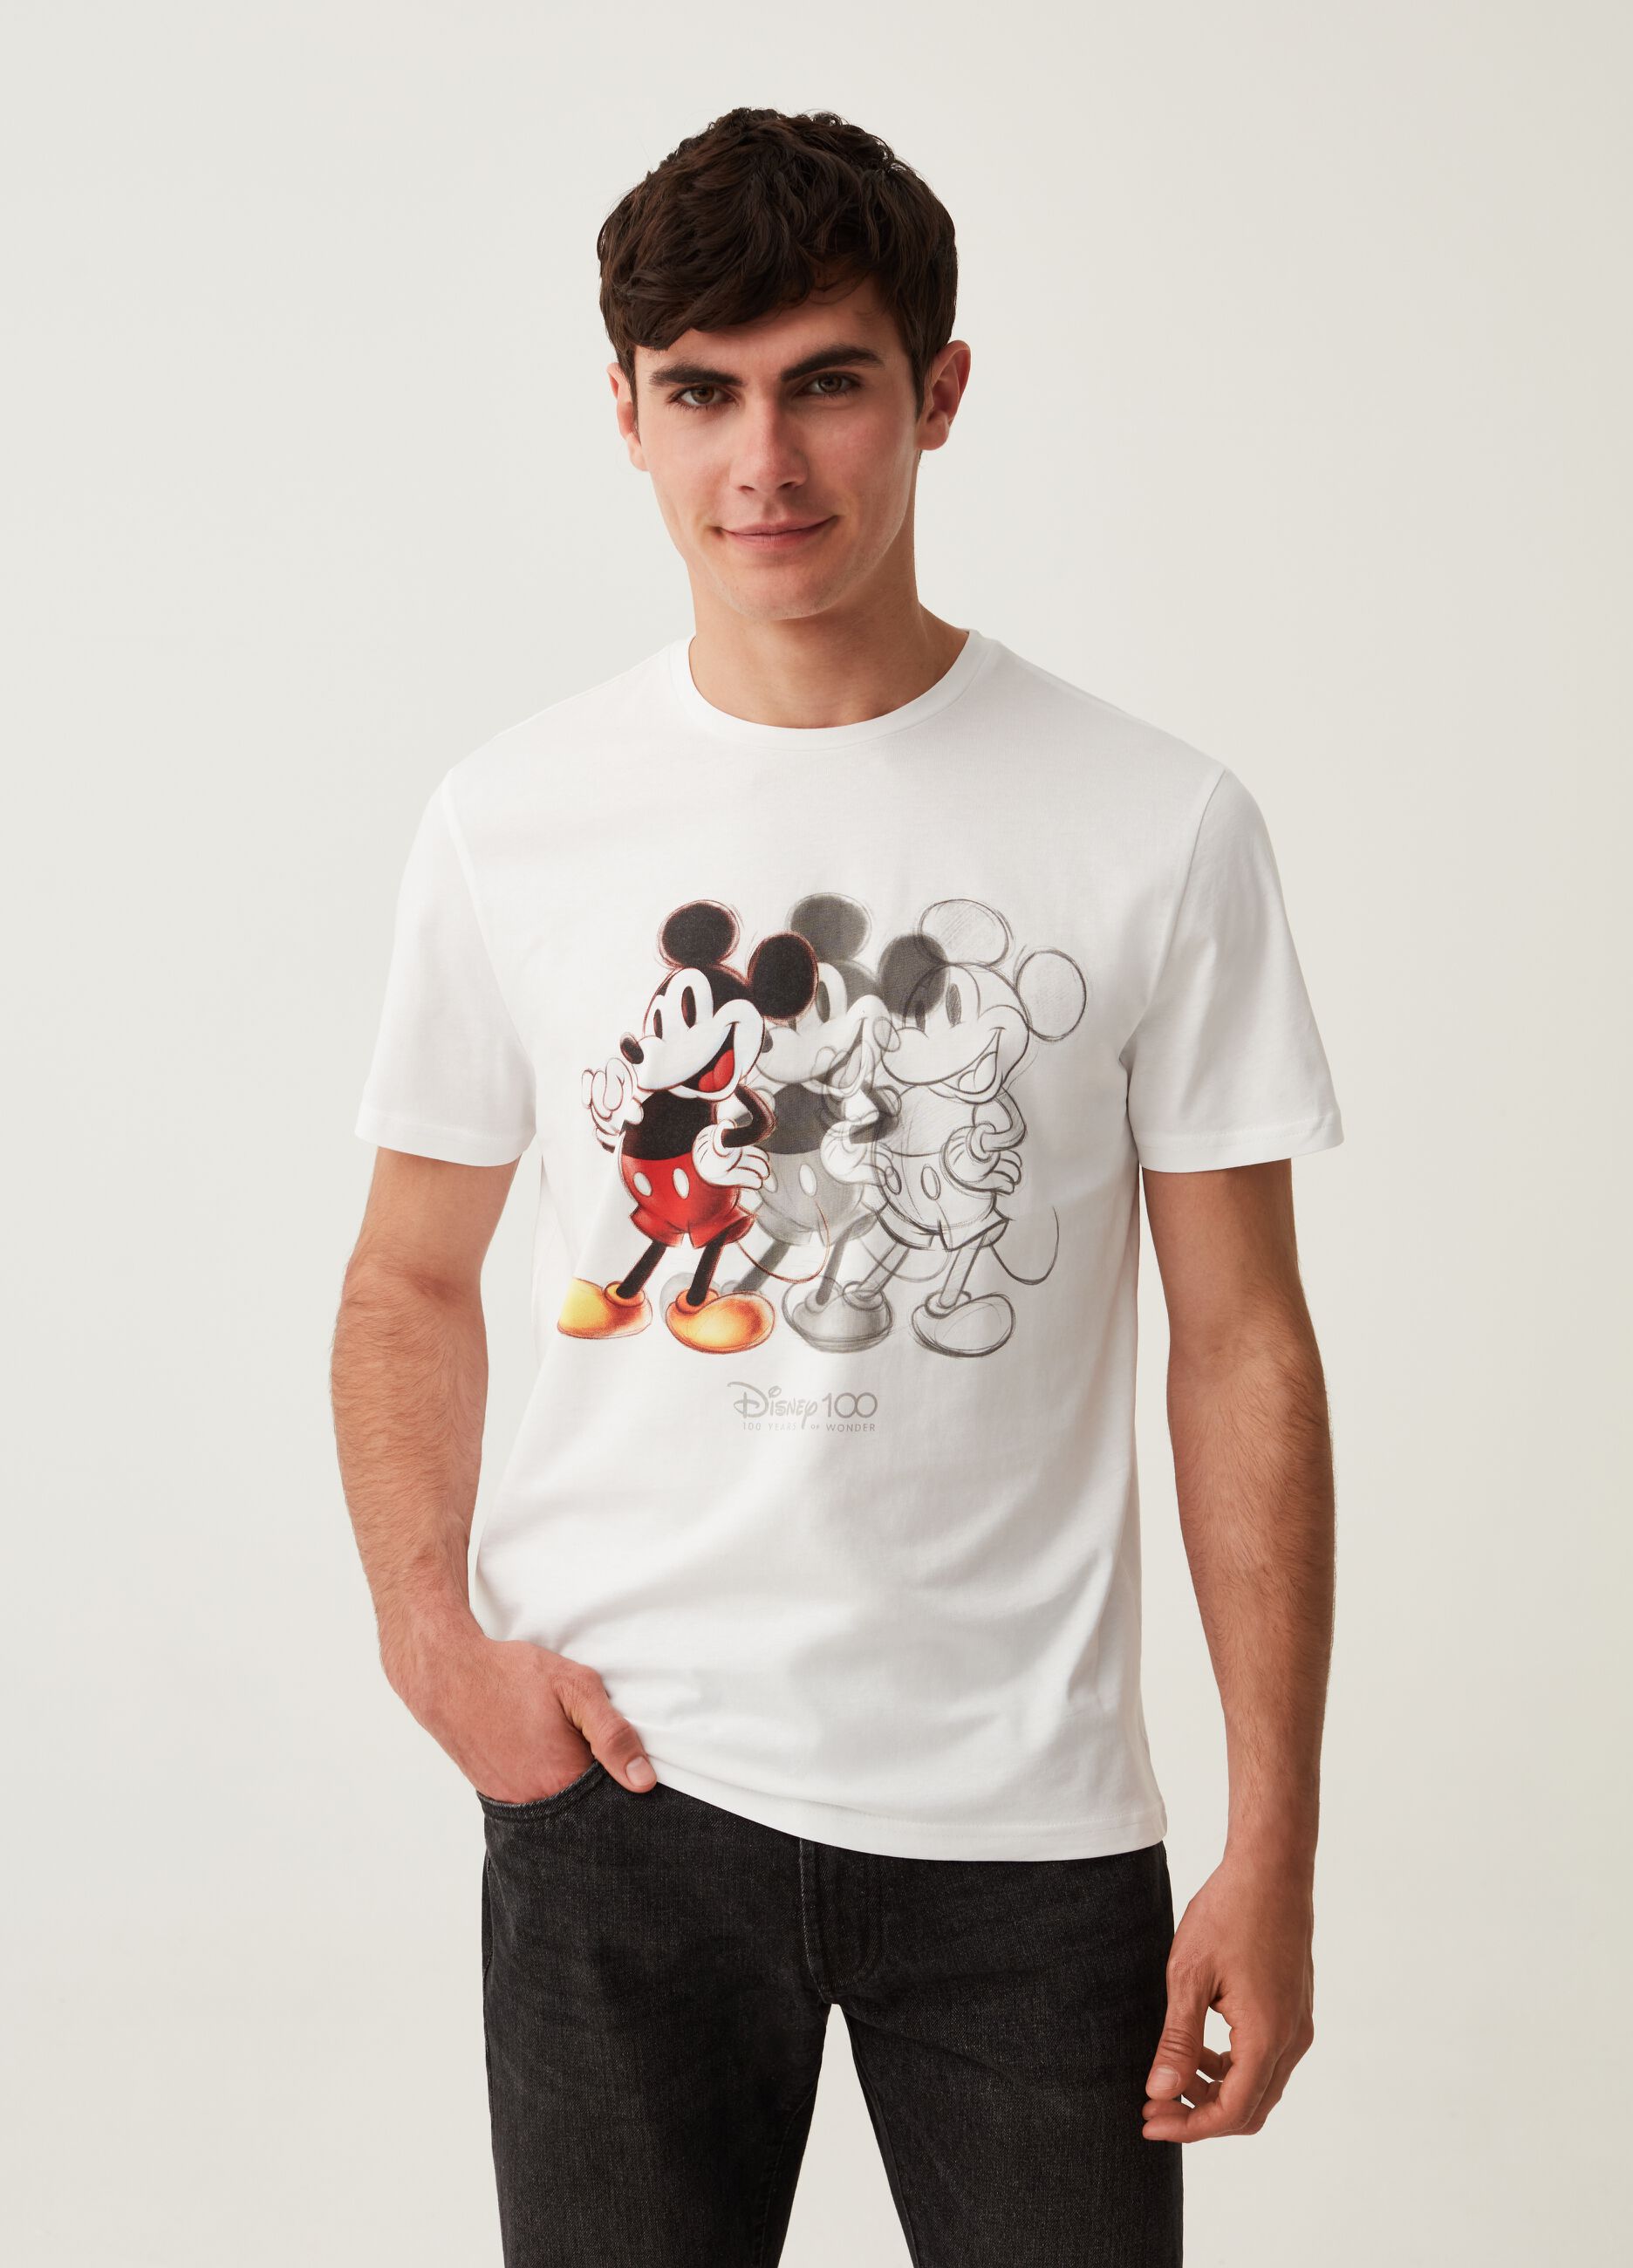 T-shirt in cotone stampa Disney 100° Anniversario